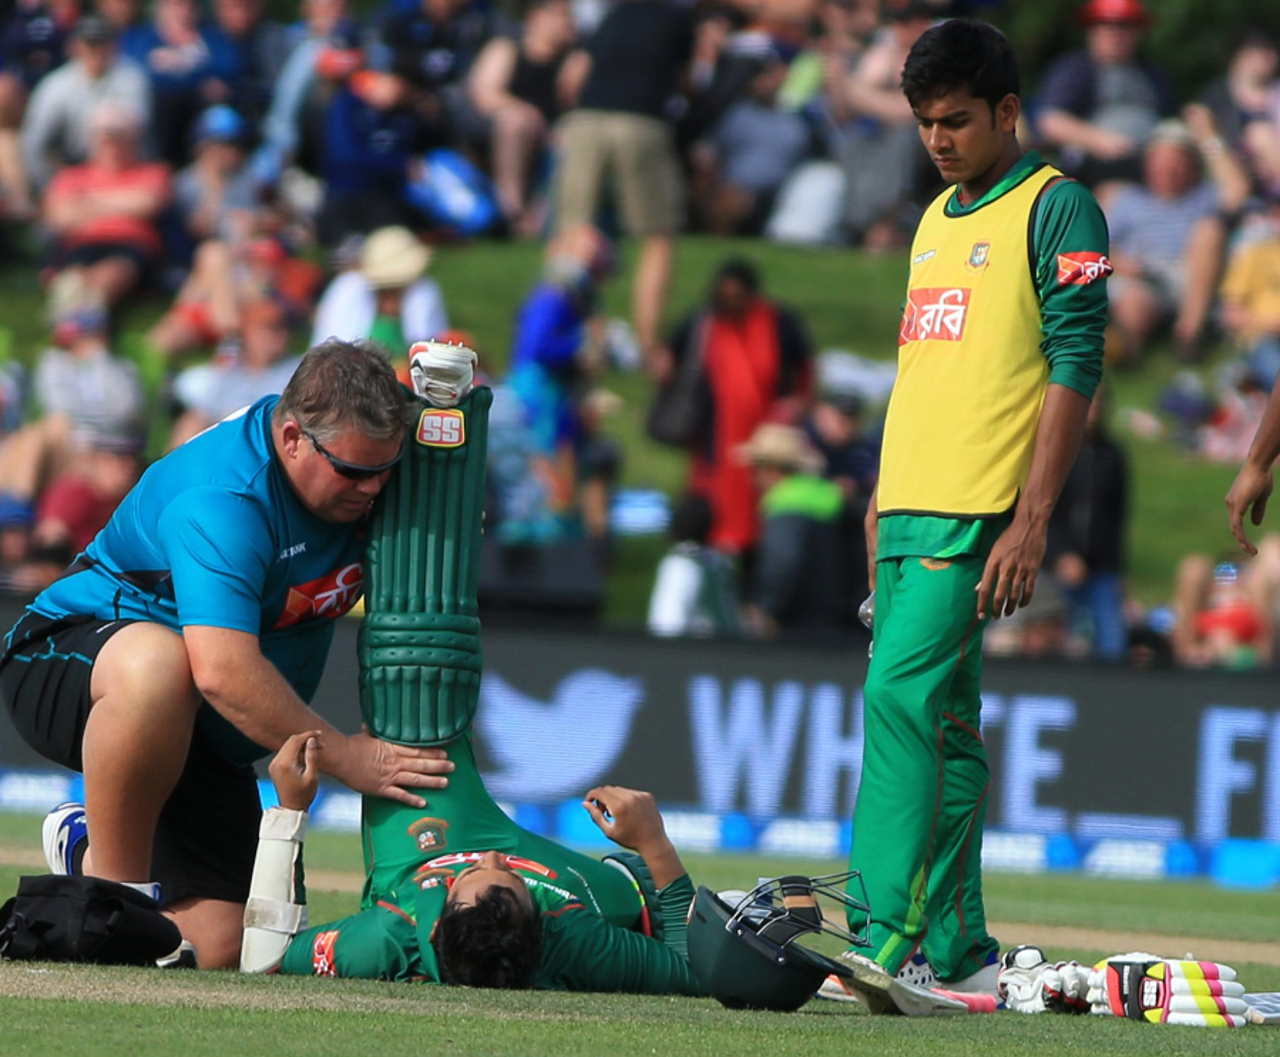 Mushfiqur Rahim had to retire hurt after a hamstring pull, New Zealand v Bangladesh, 1st ODI, Christchurch, December 26, 2016